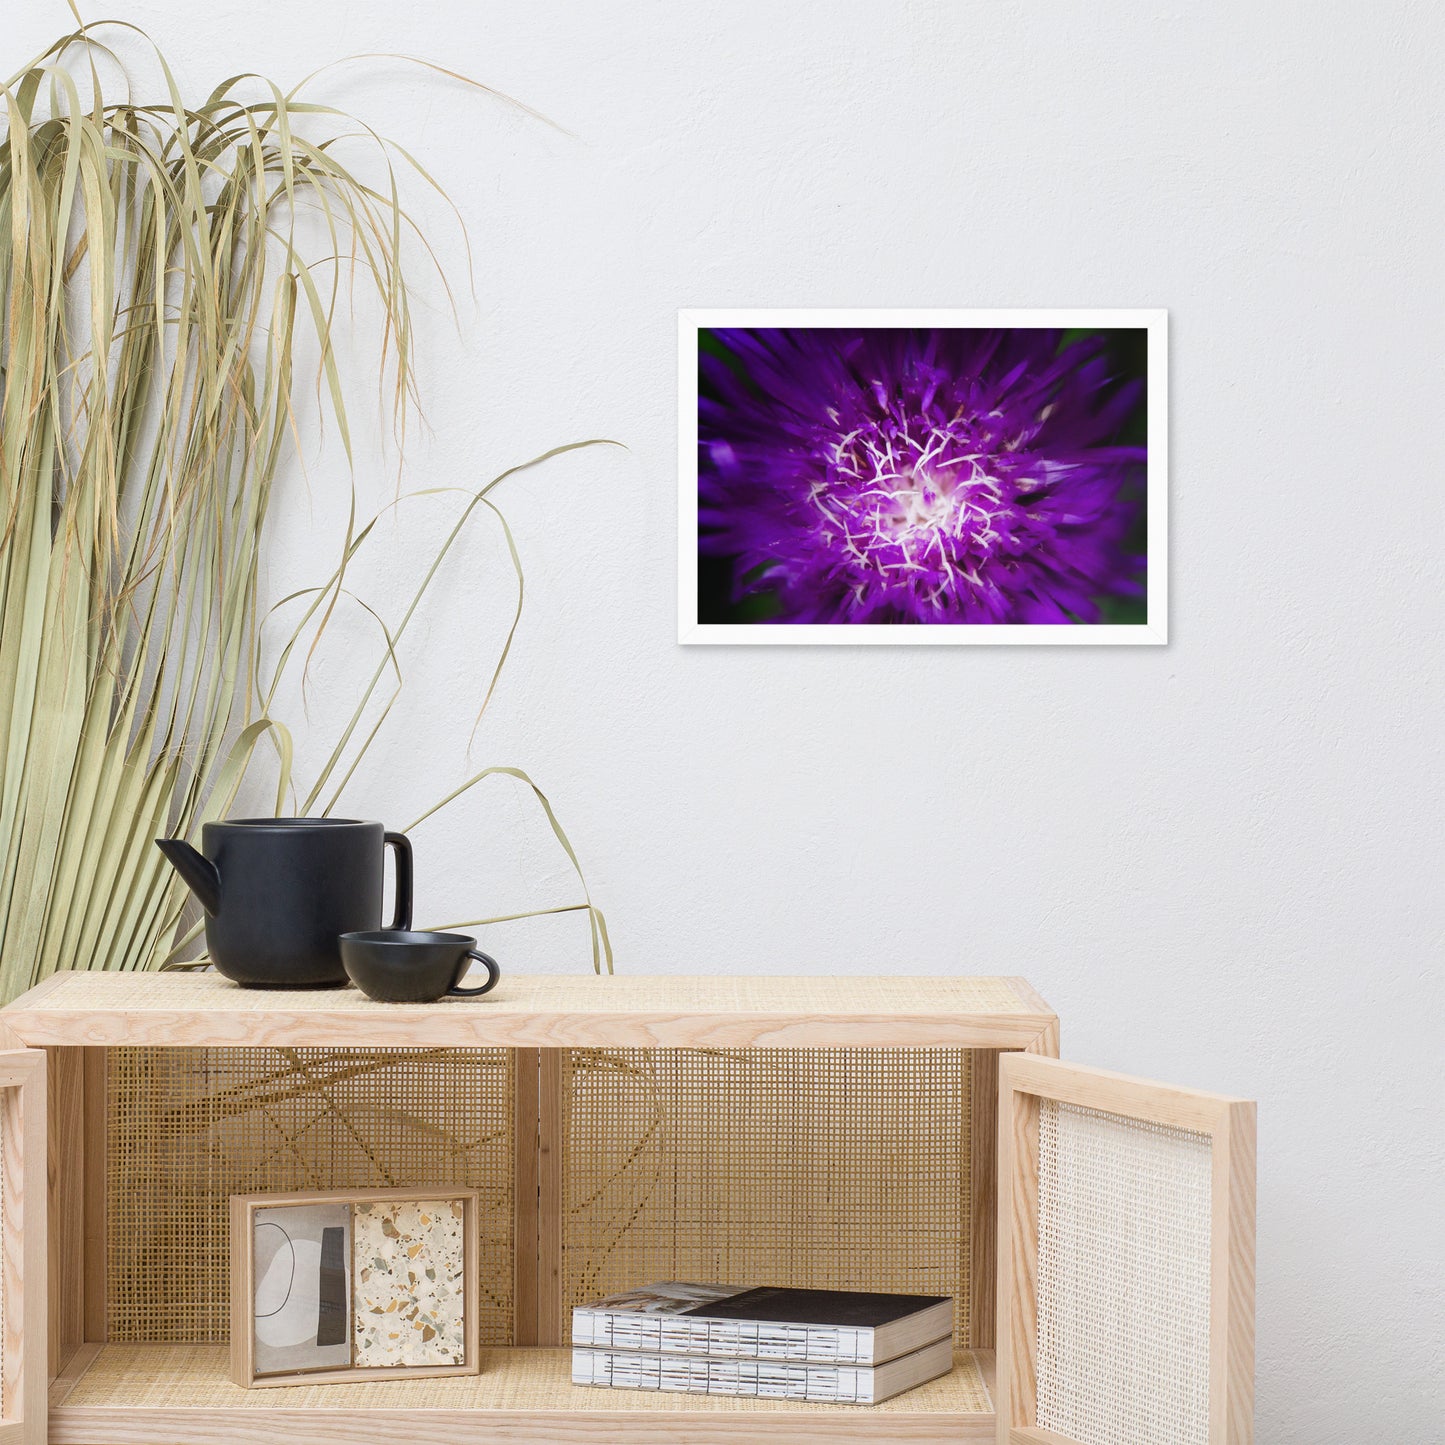 Modern Abstract Living Room: Purple Abstract Flower - Botanical / Floral / Flora / Flowers / Nature Photograph Framed Wall Art Print - Artwork - Wall Decor